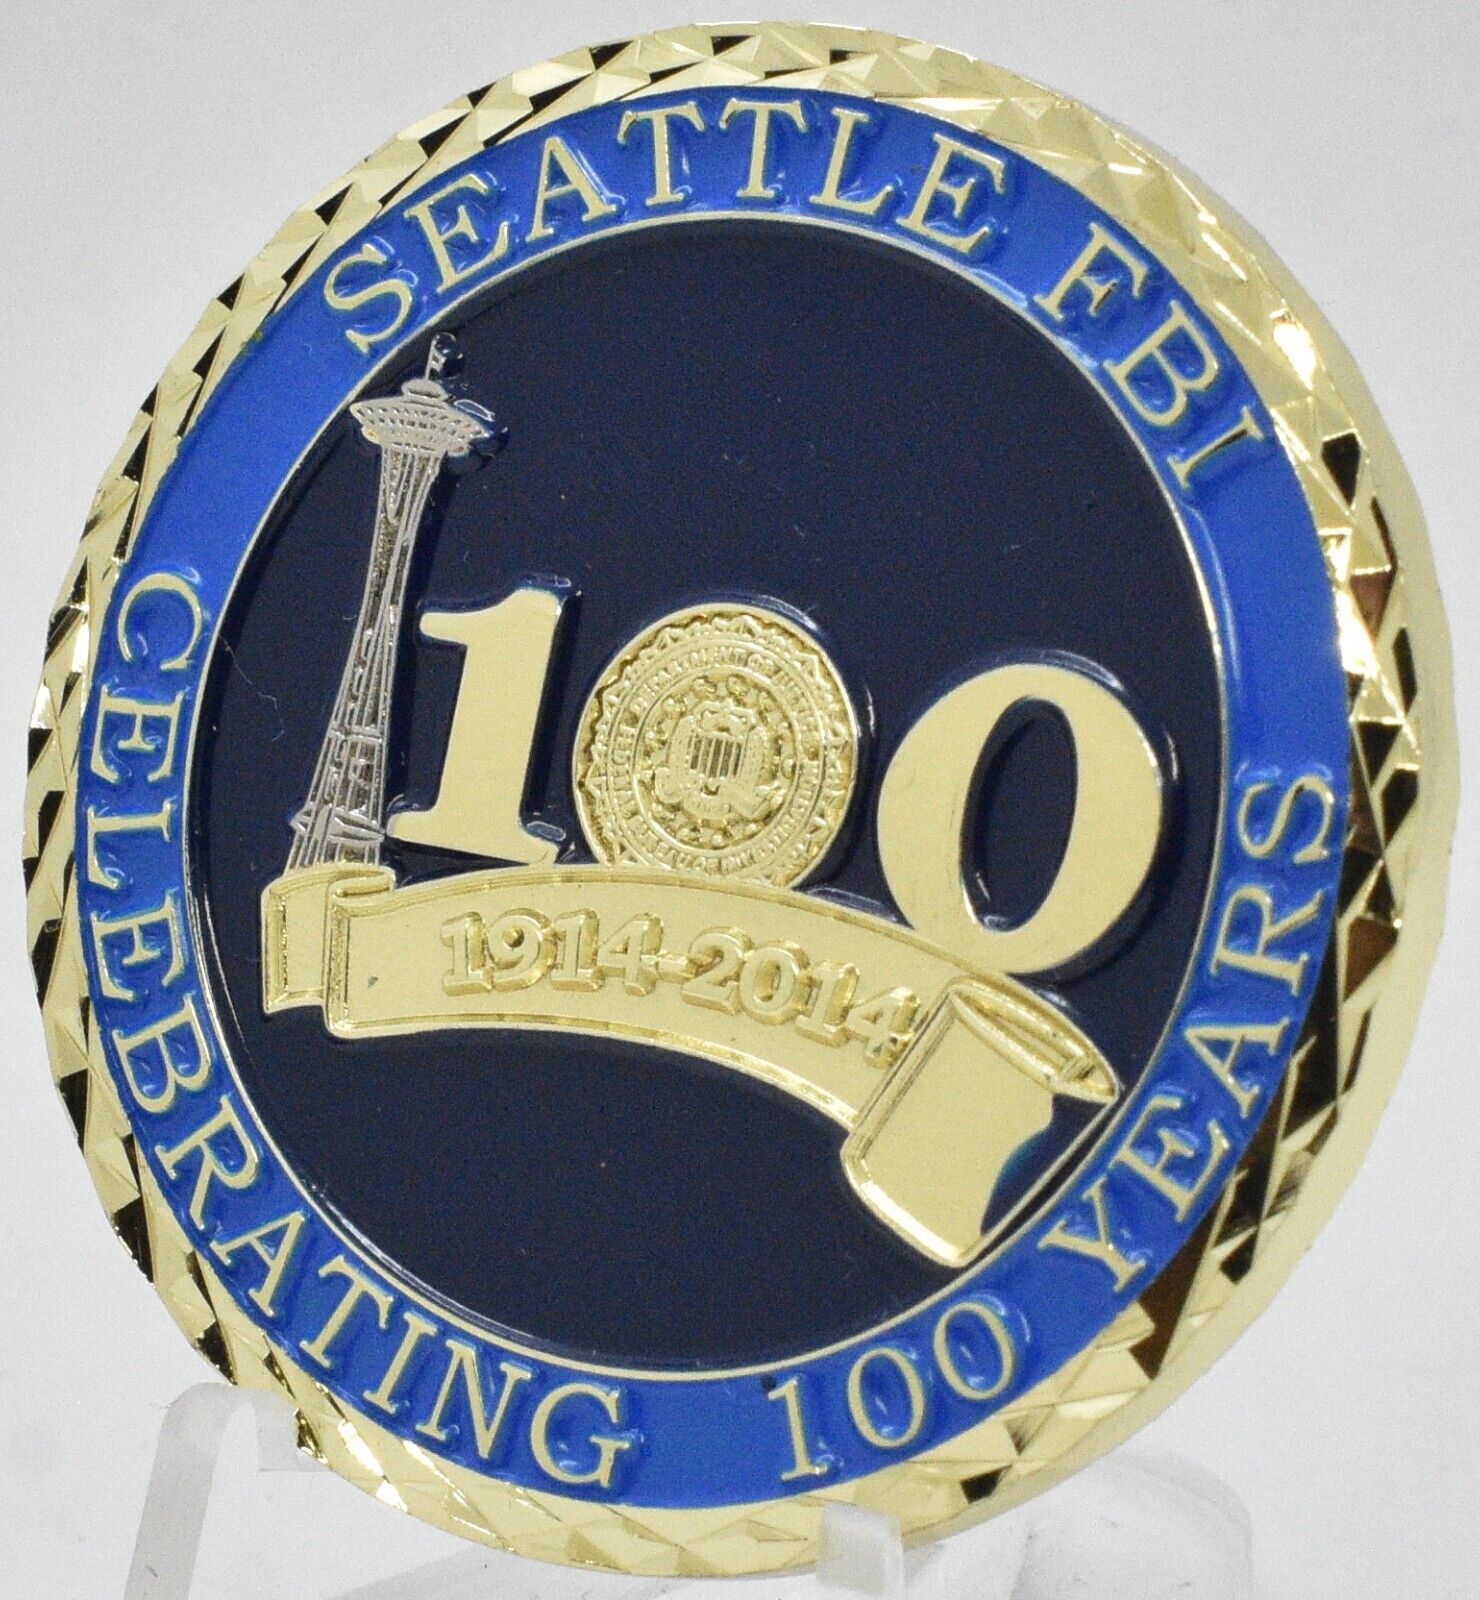 FBI Seattle Washington Division 2014 100th Anniversary Challenge Coin